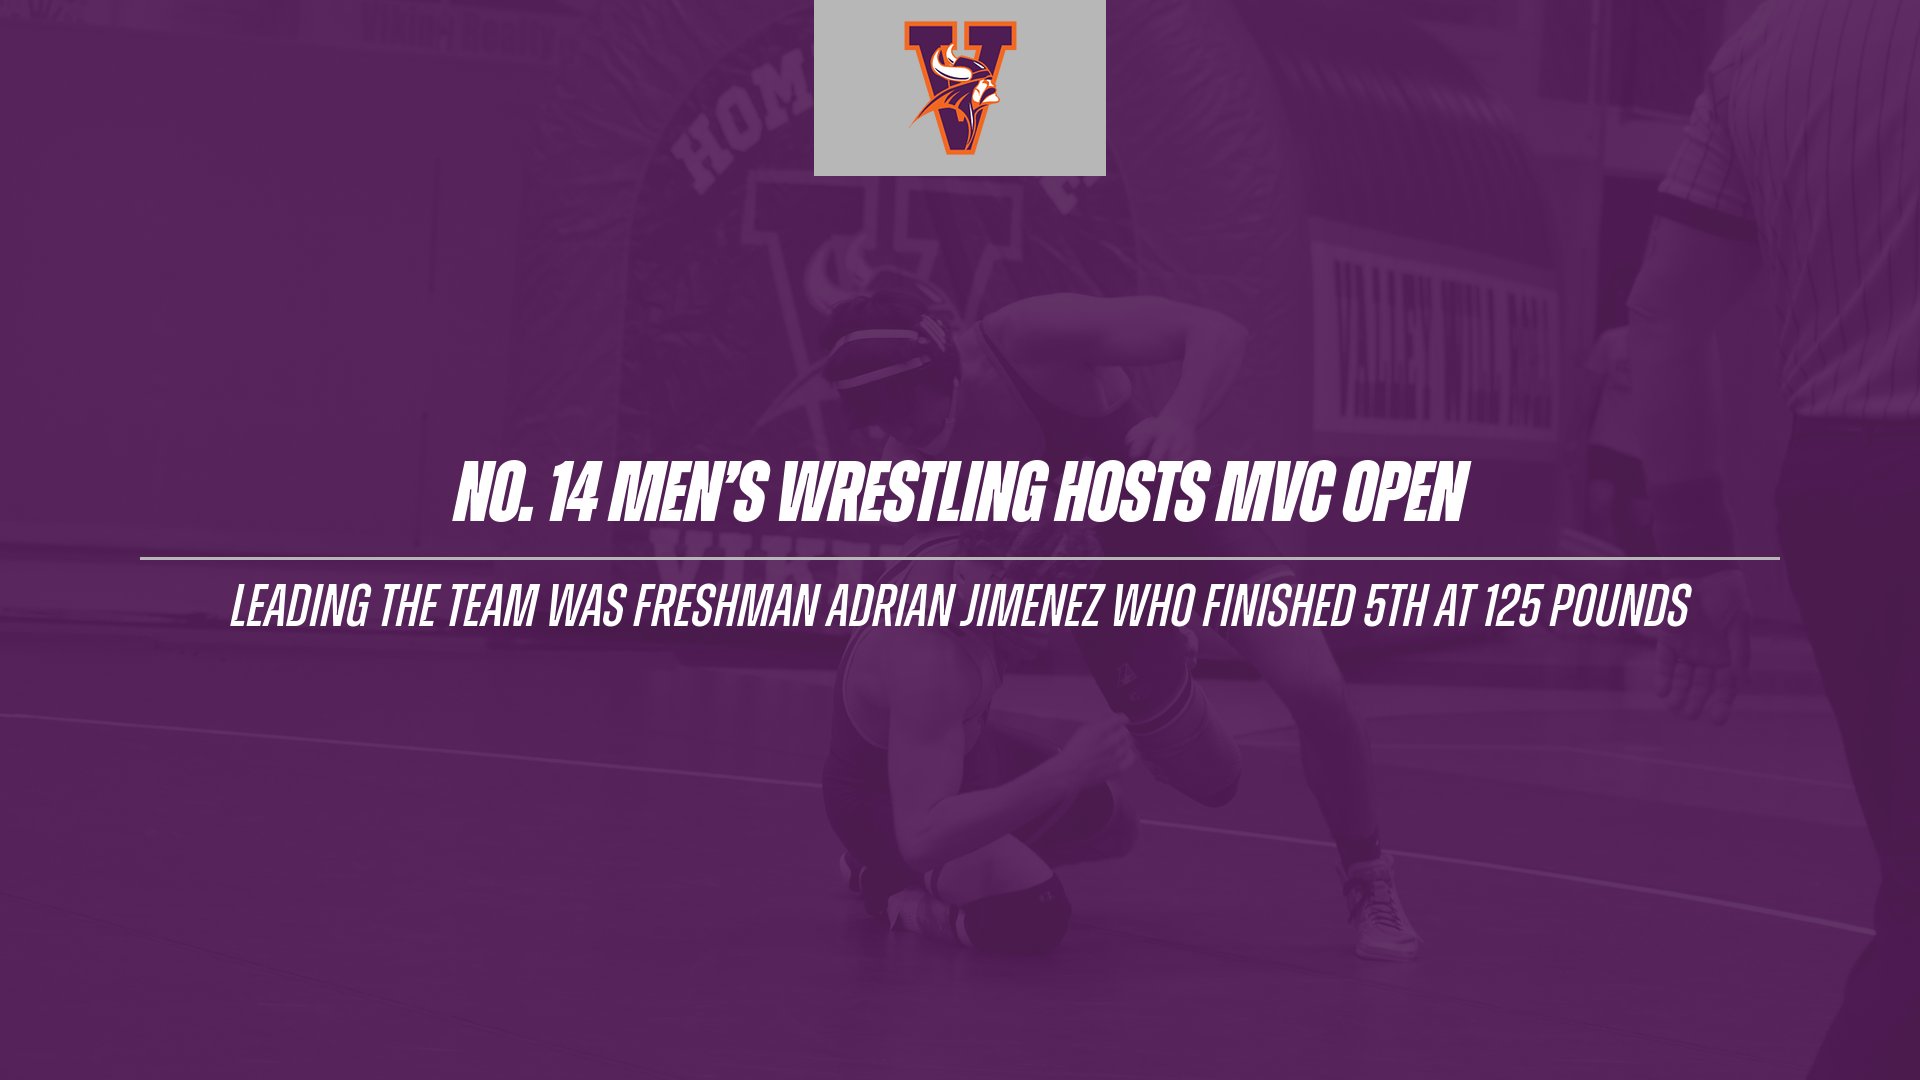 No. 14 Men's Wrestling Hosts MVC Open